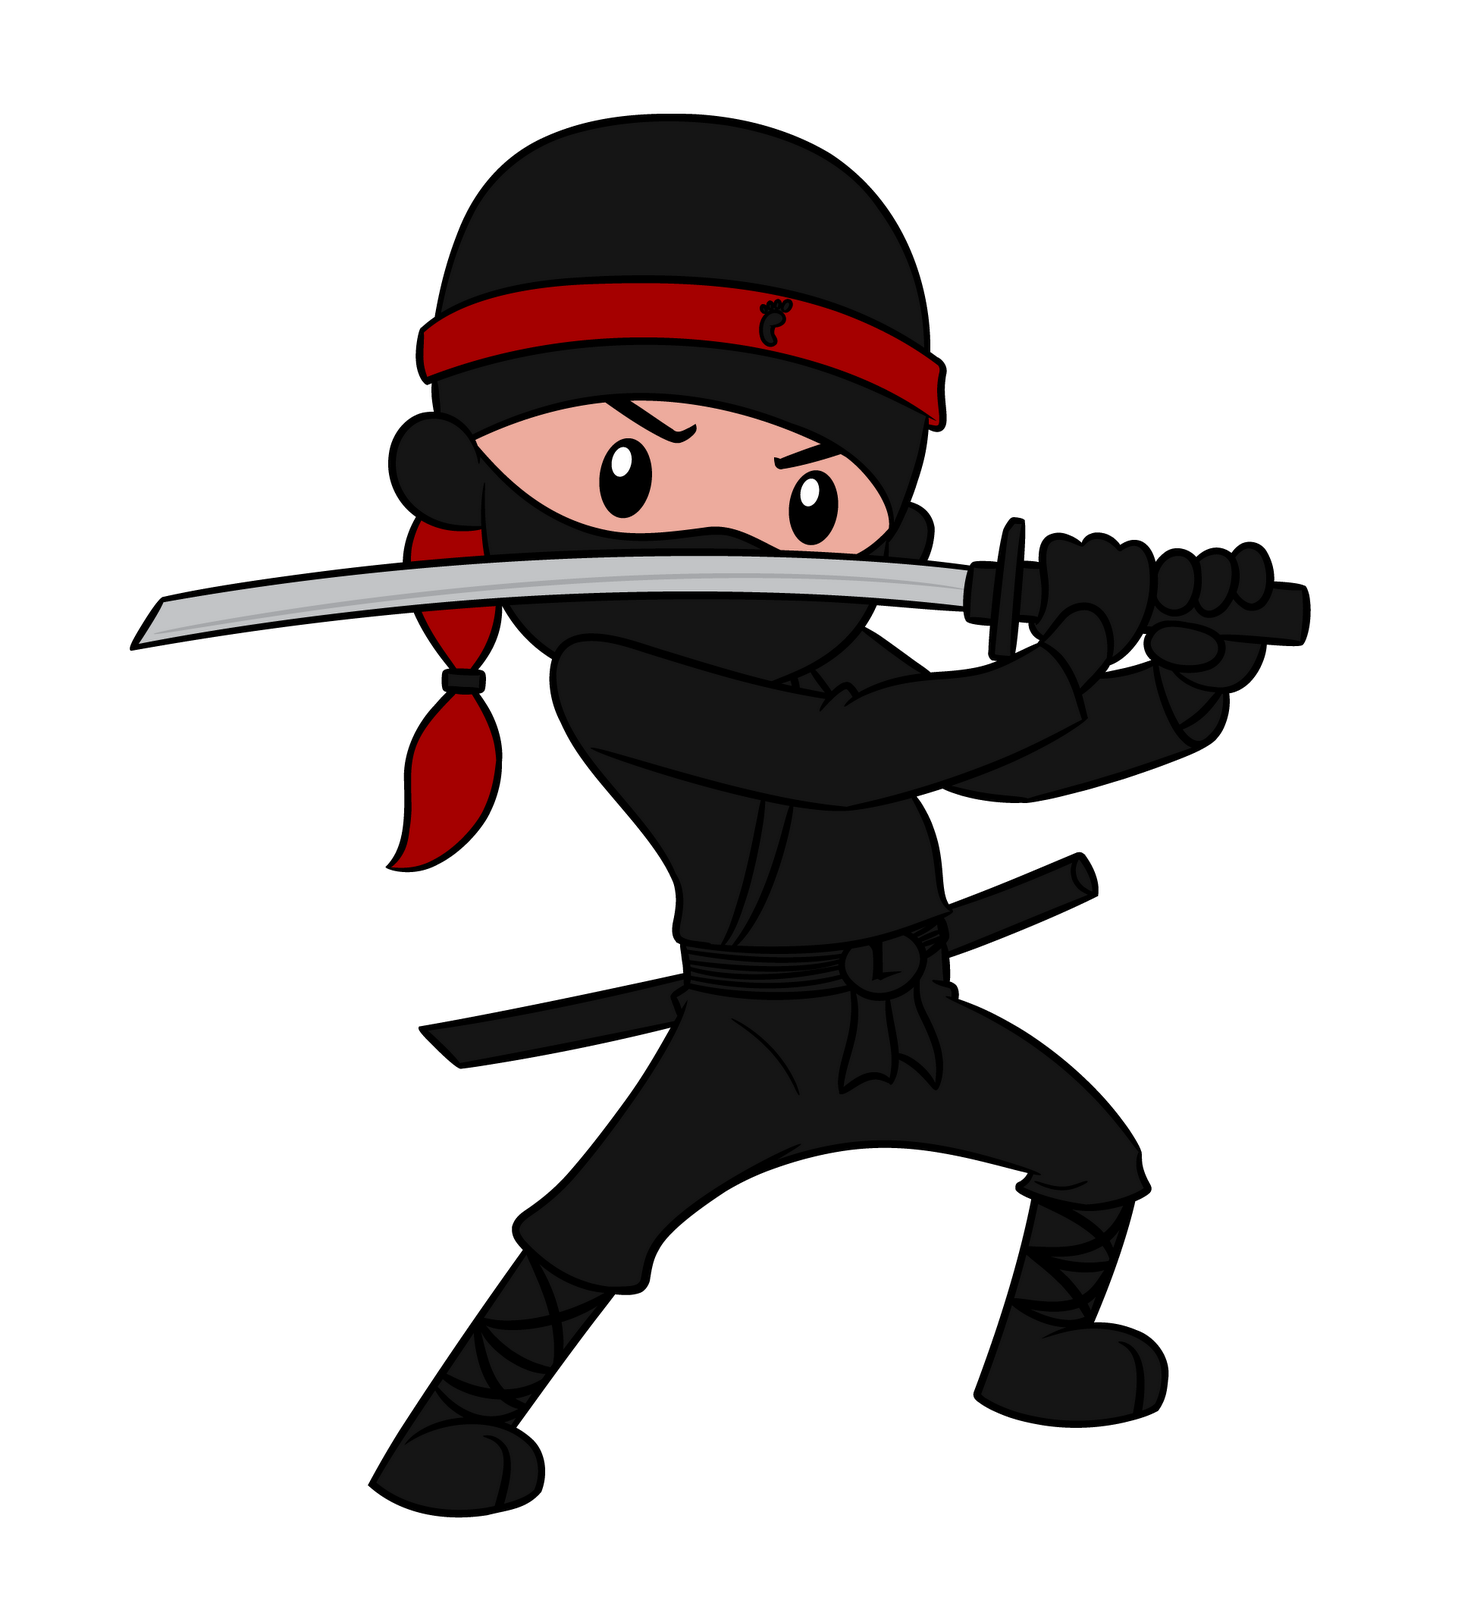 Ninja, sát thủ